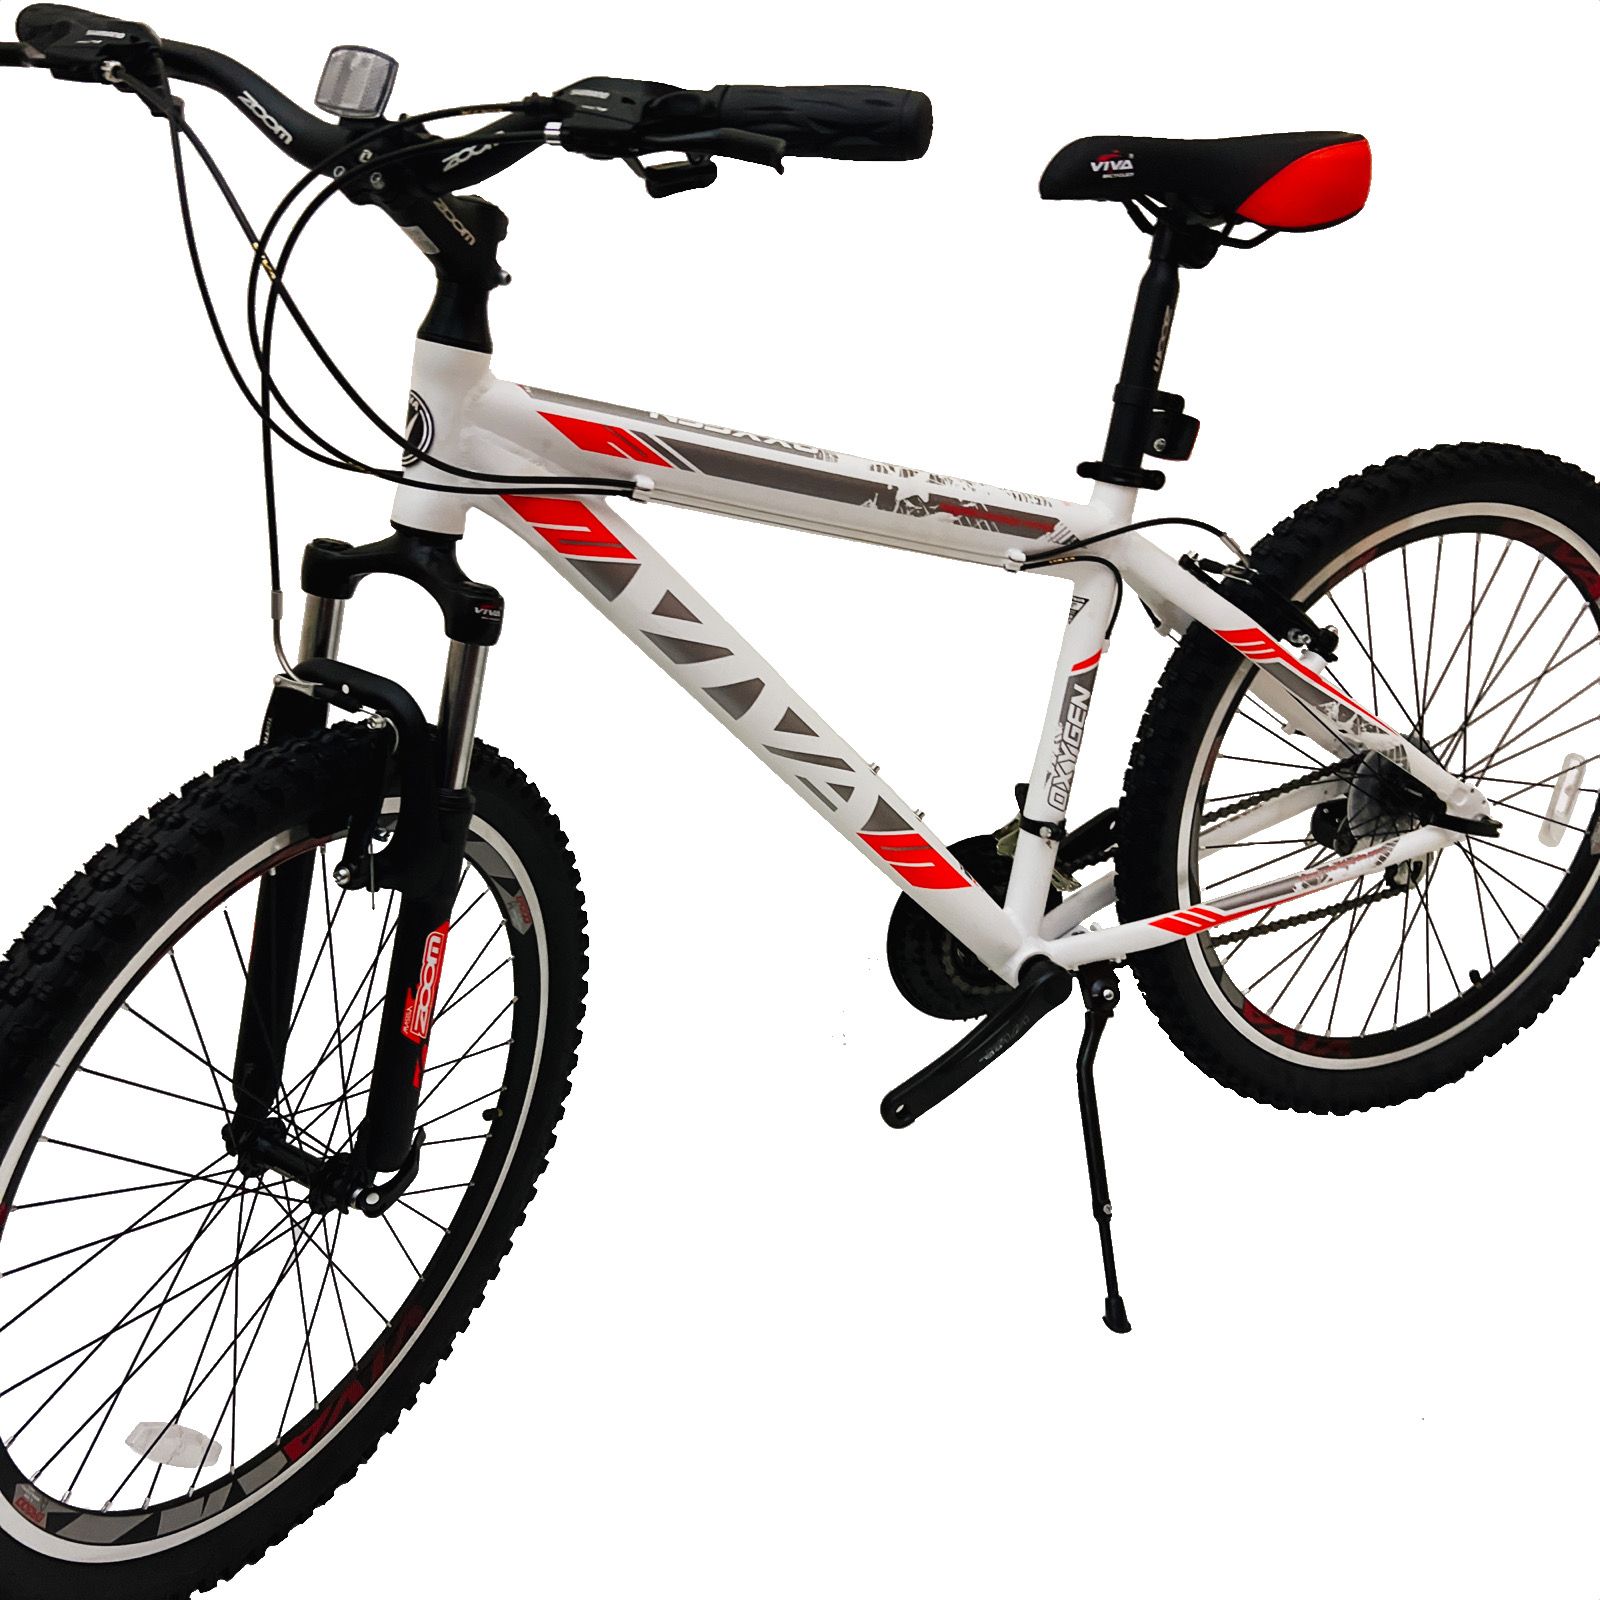 دوچرخه کوهستان ویوا مدل OXYGEN کد 100 سایز 26 -  - 9